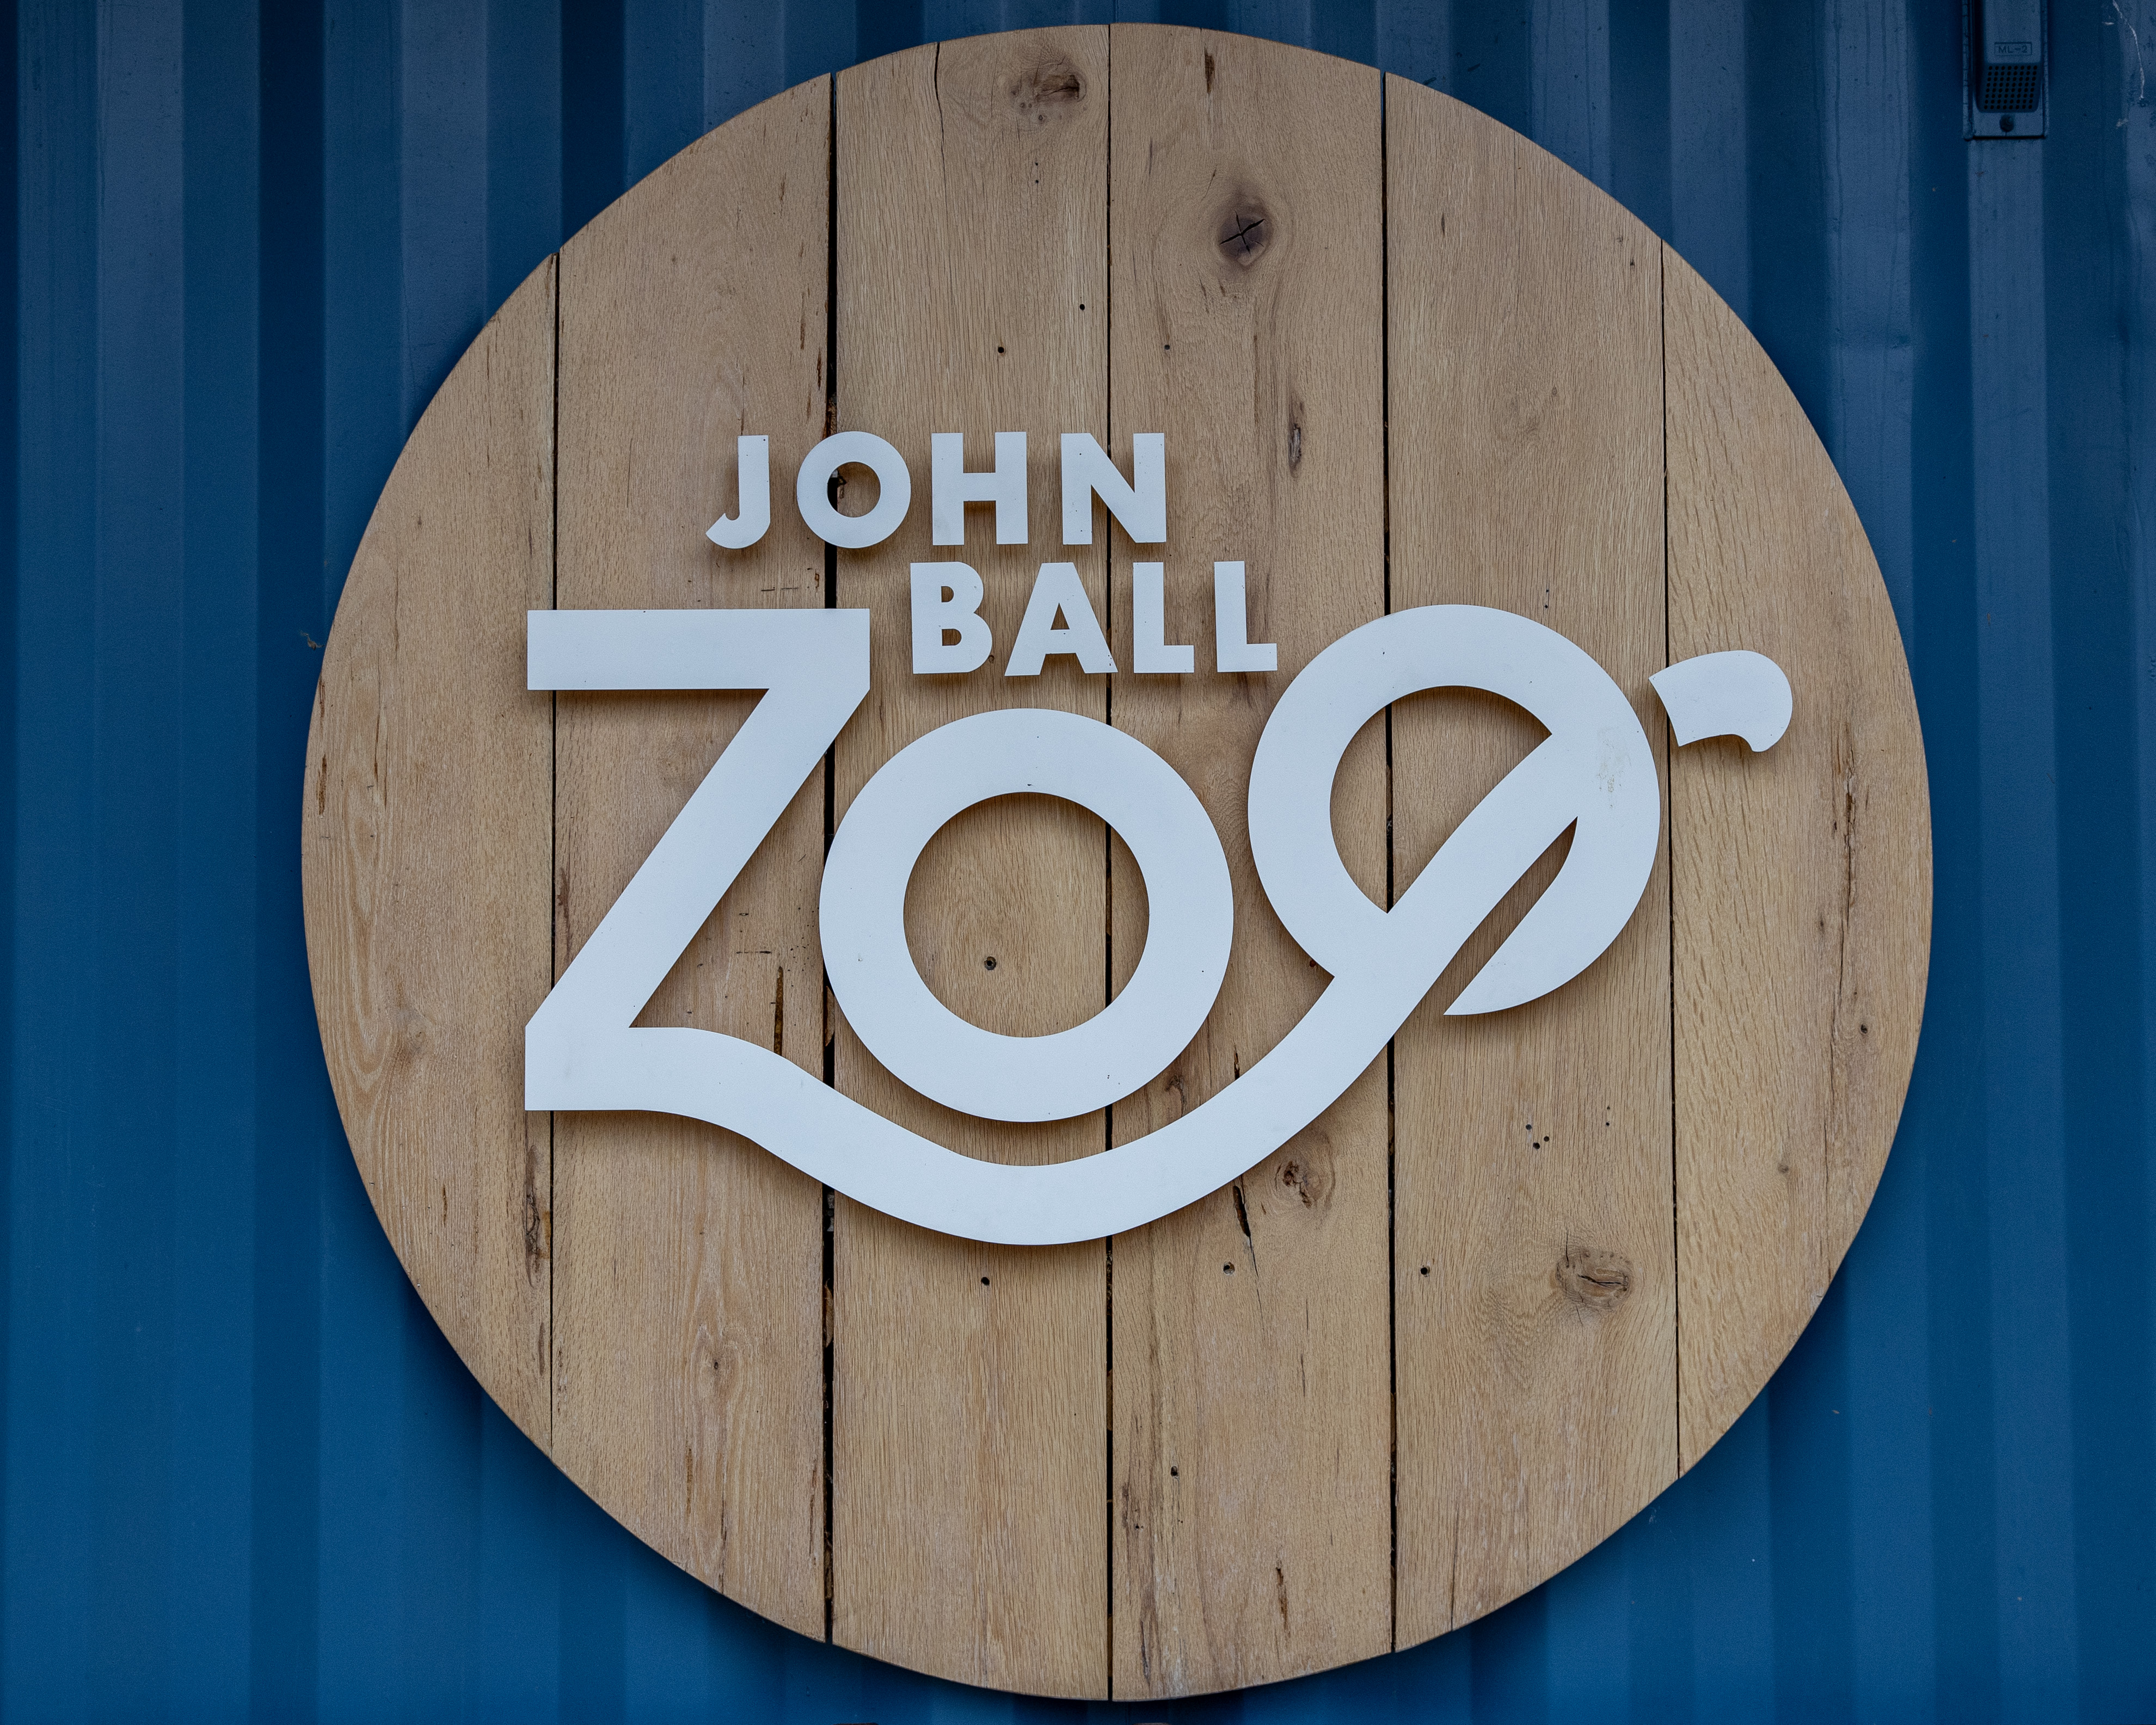 John Ball Zoo parking lot vote postponed for more community input